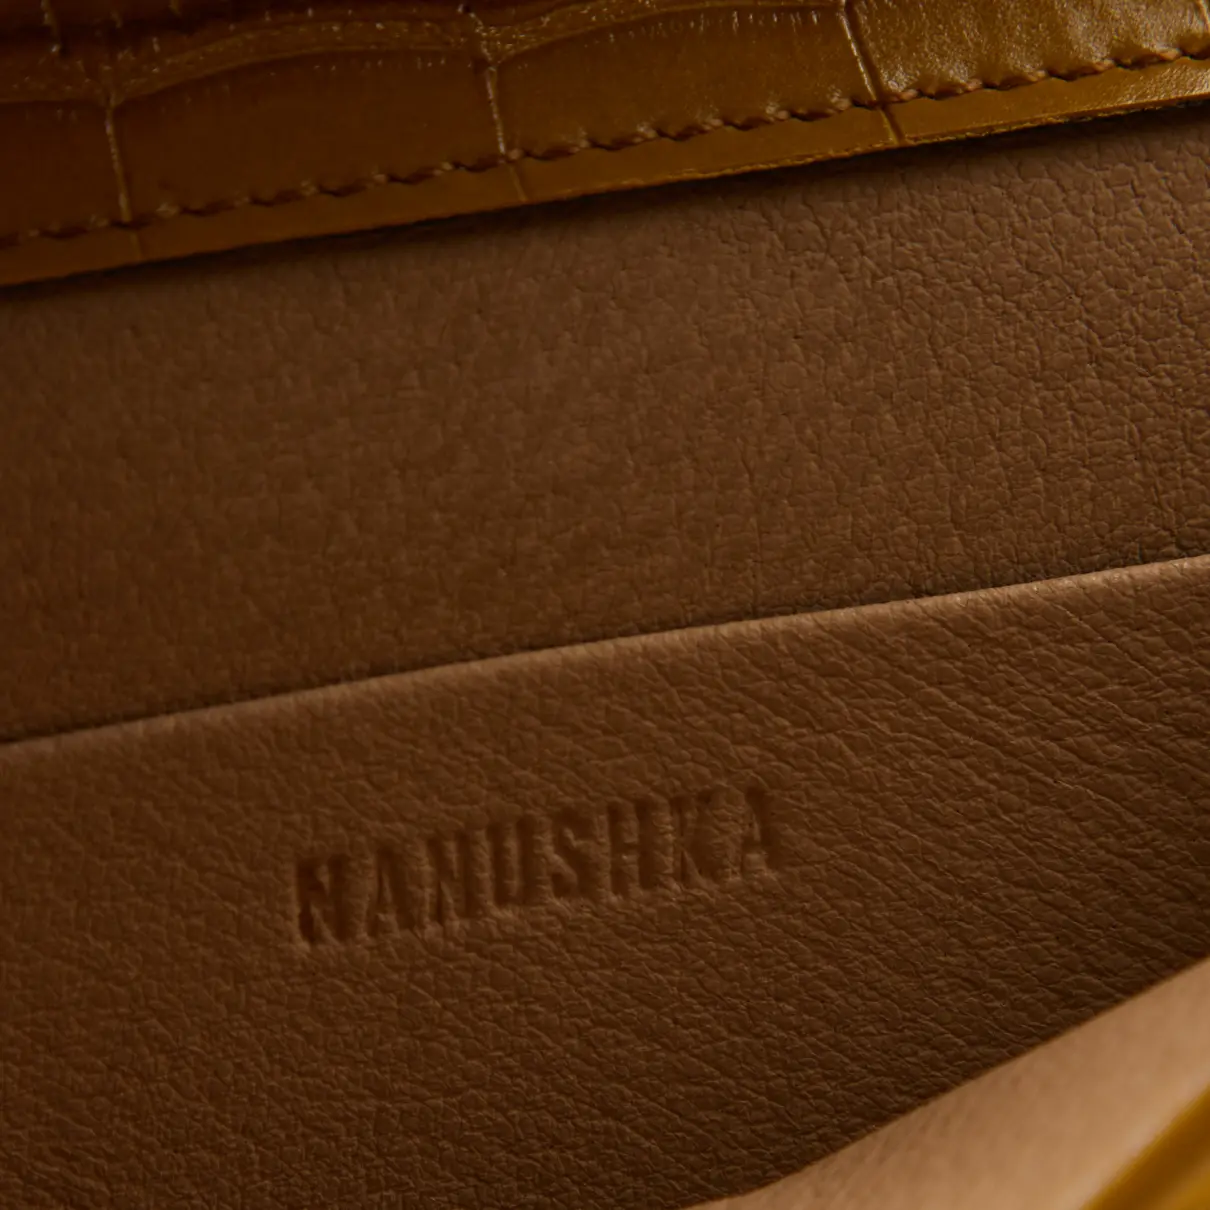 Leather crossbody bag Nanushka